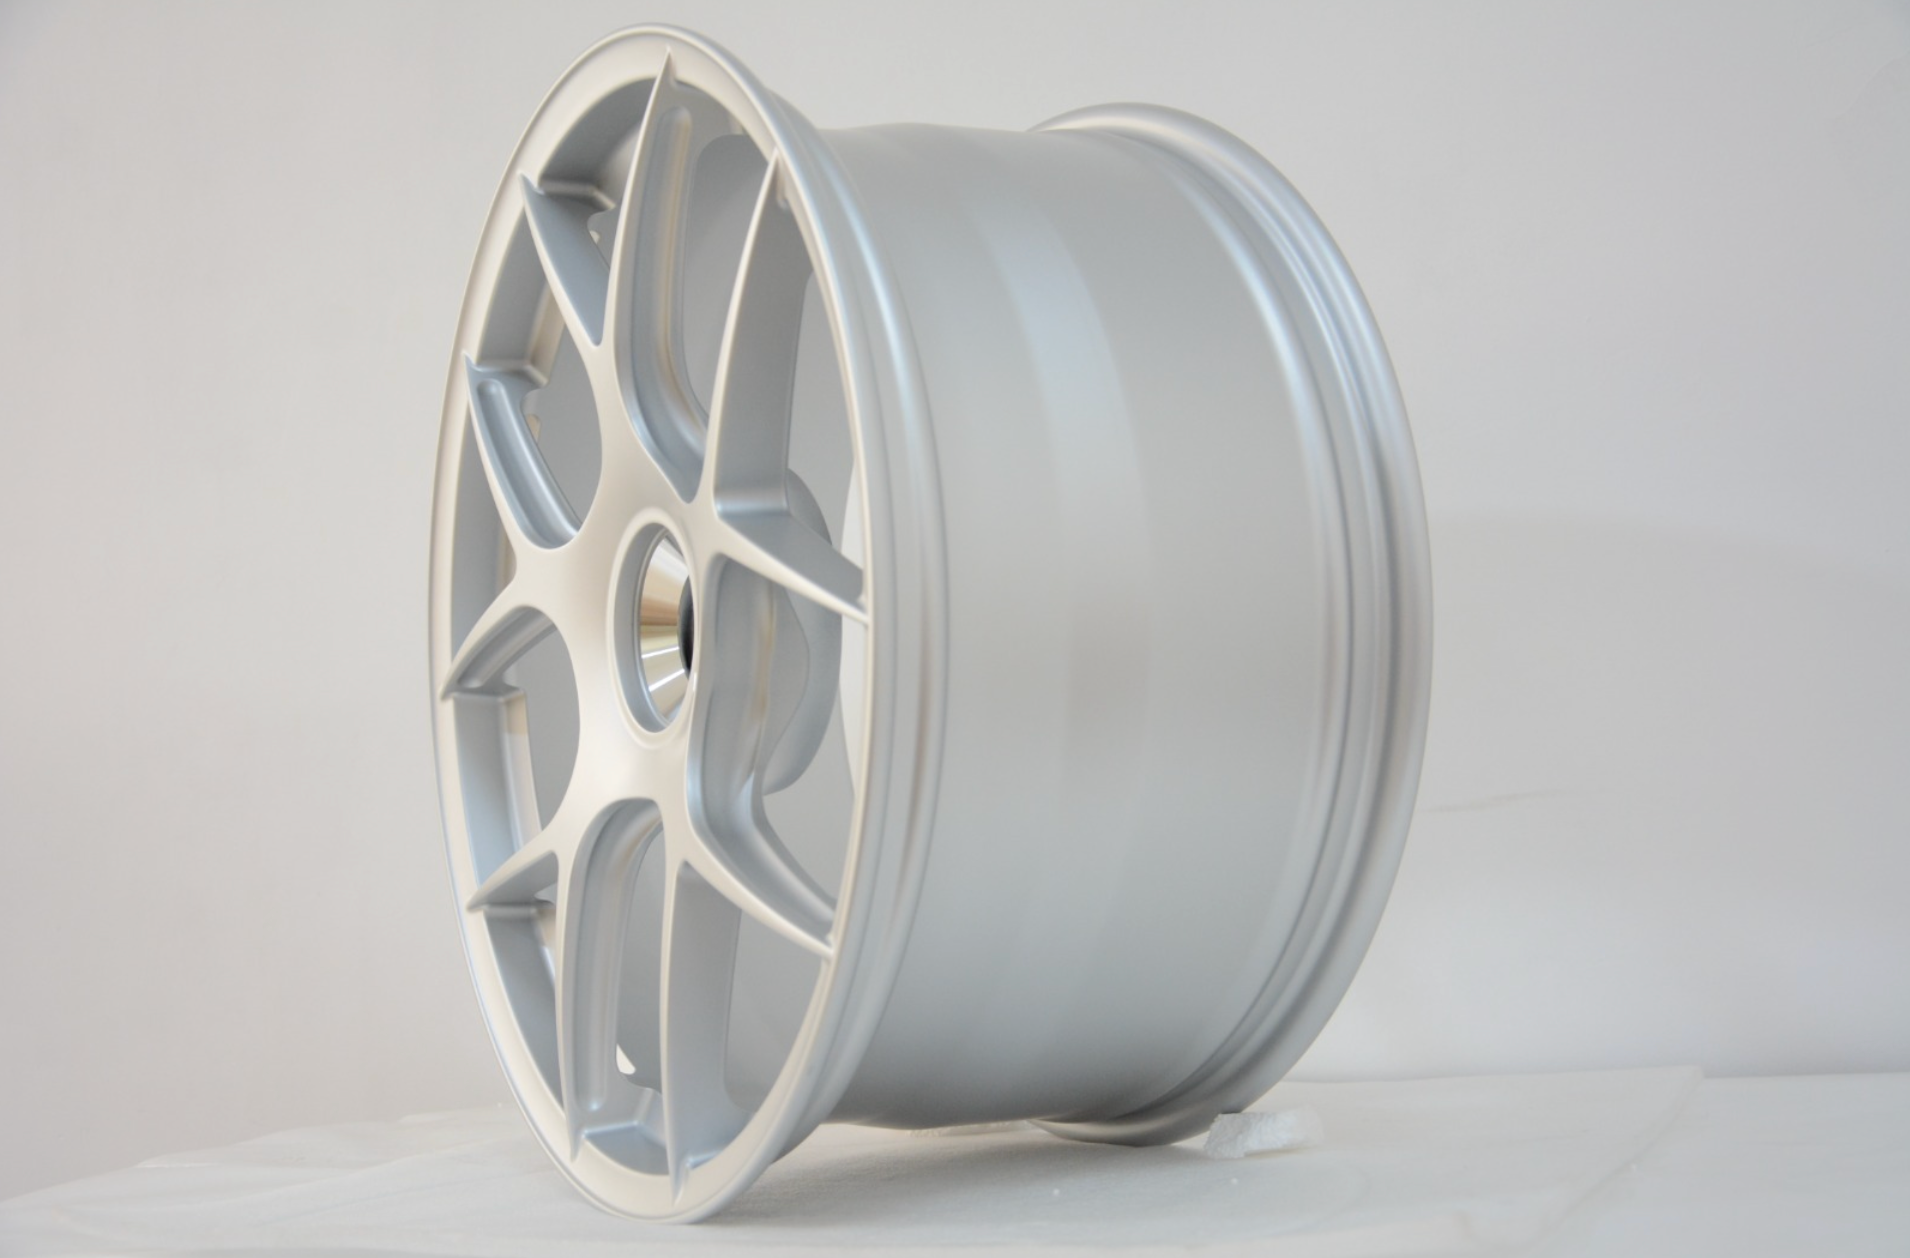 Wheels and Tires/Axles - Meisterwerk Racing - 992 GT3 "ST" Wheel set - New - Calabasas, CA 91302, United States